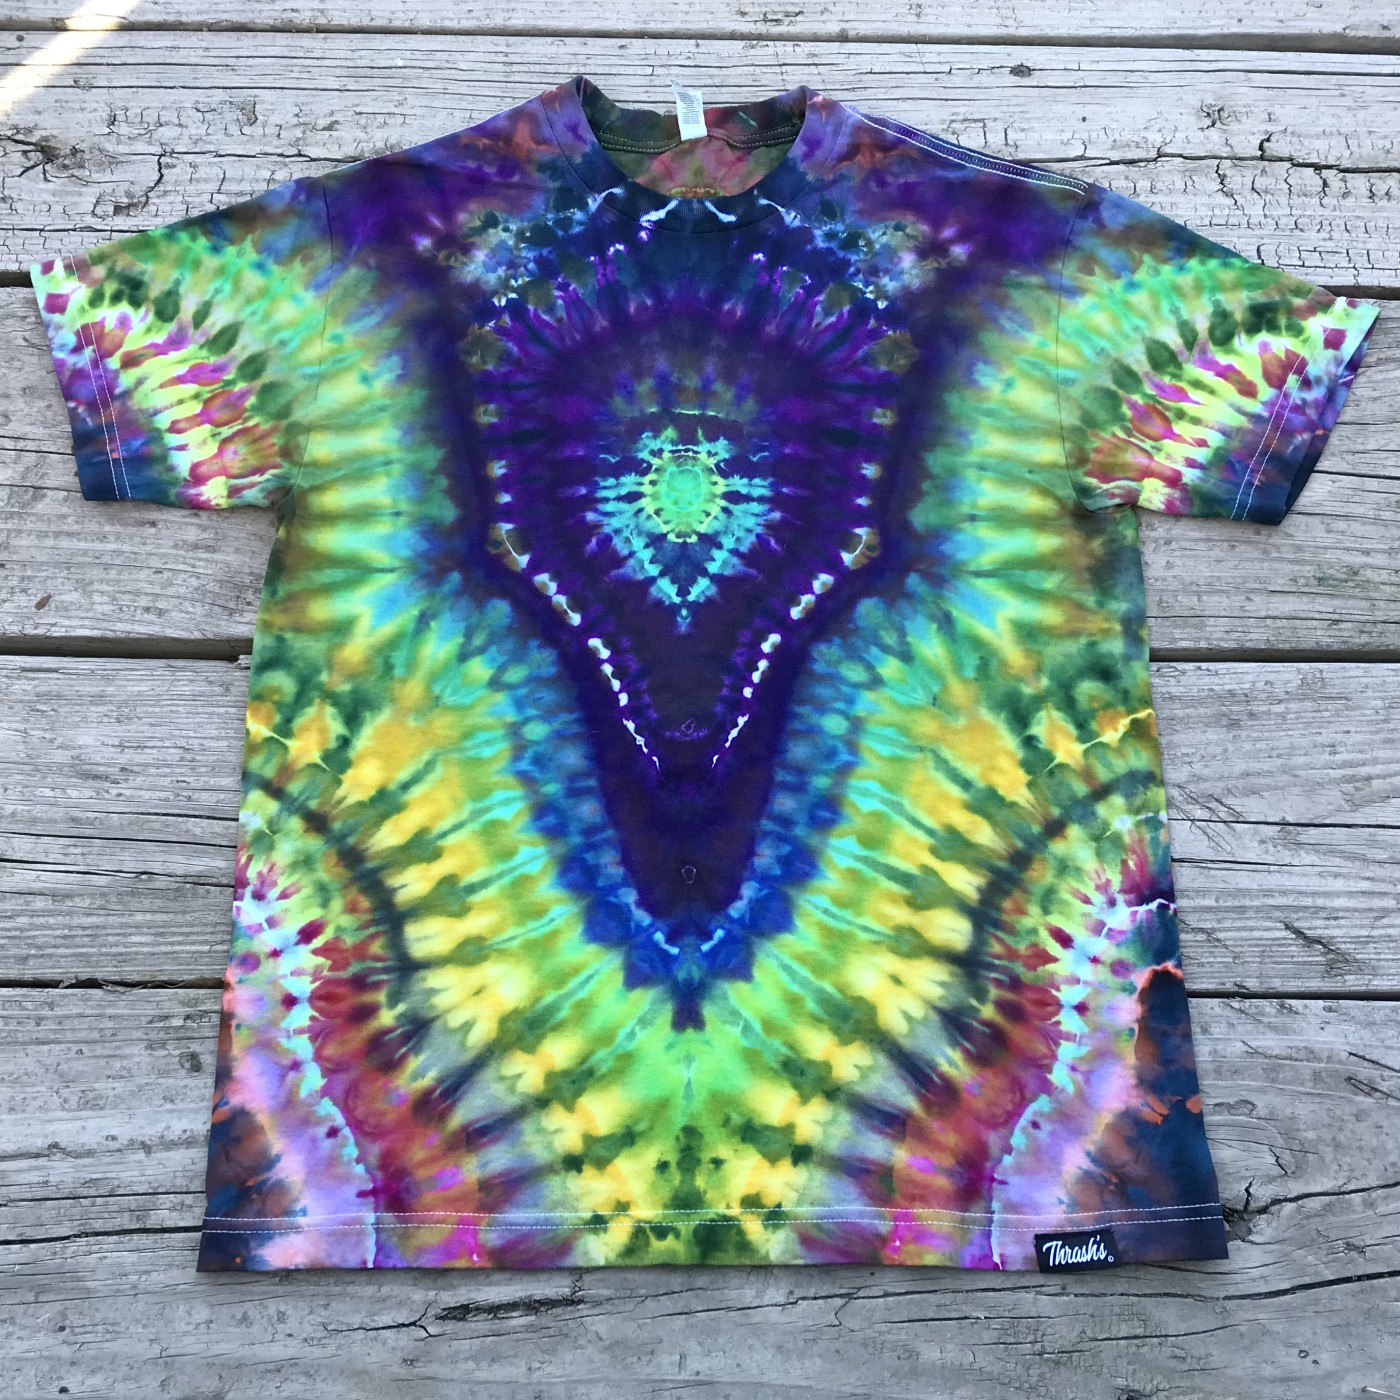 Medium size tie dye T-shirt by Matt Thrash